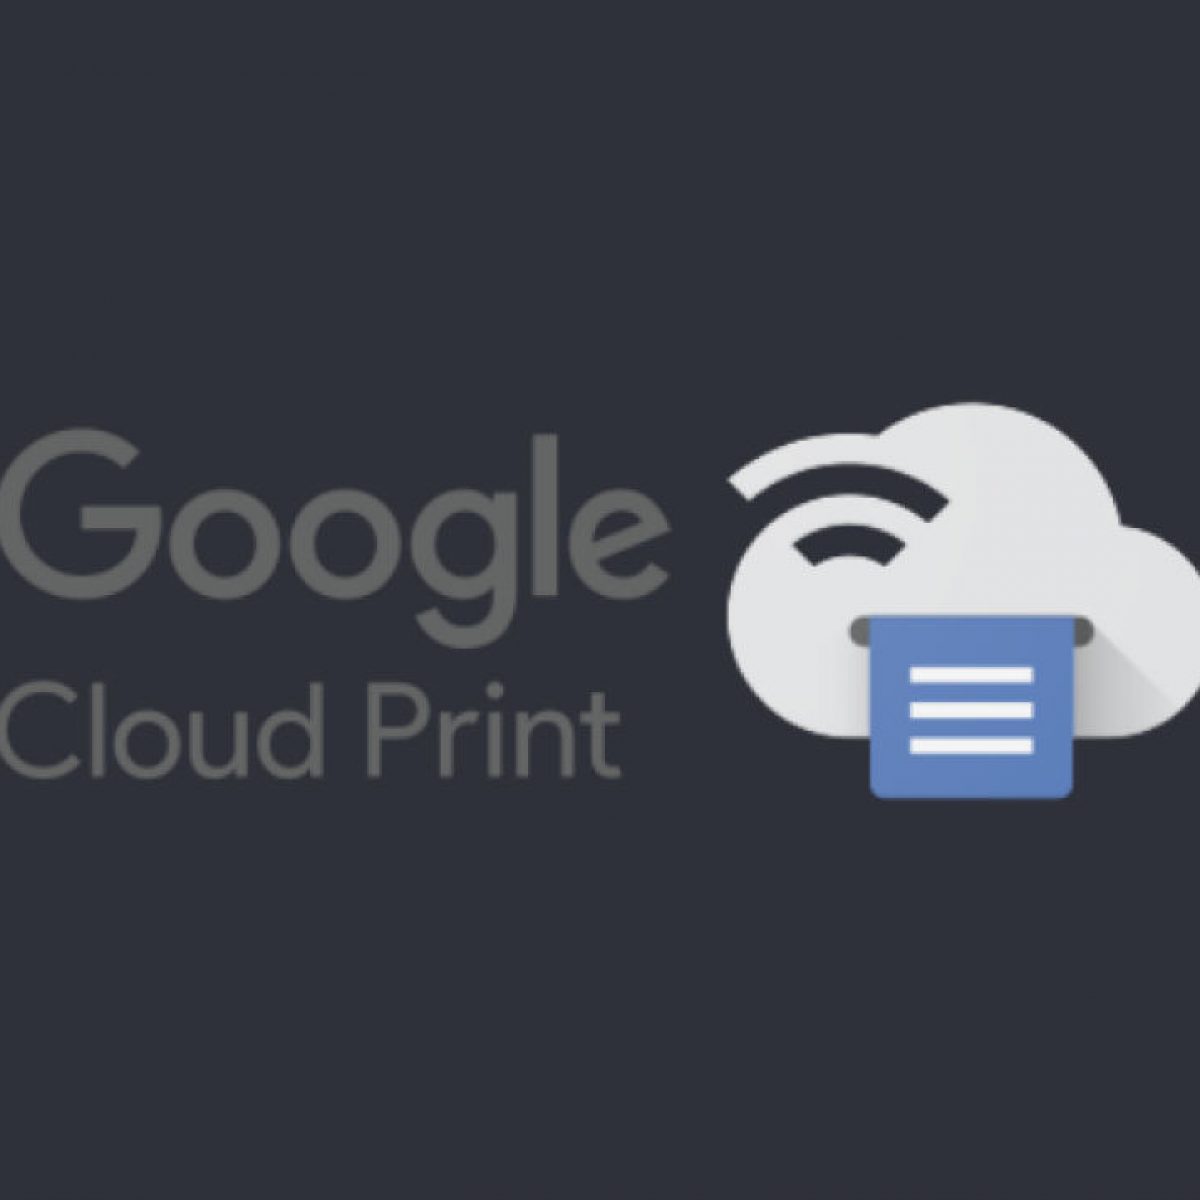 Google Cloud Print: Shutting Down December 2020